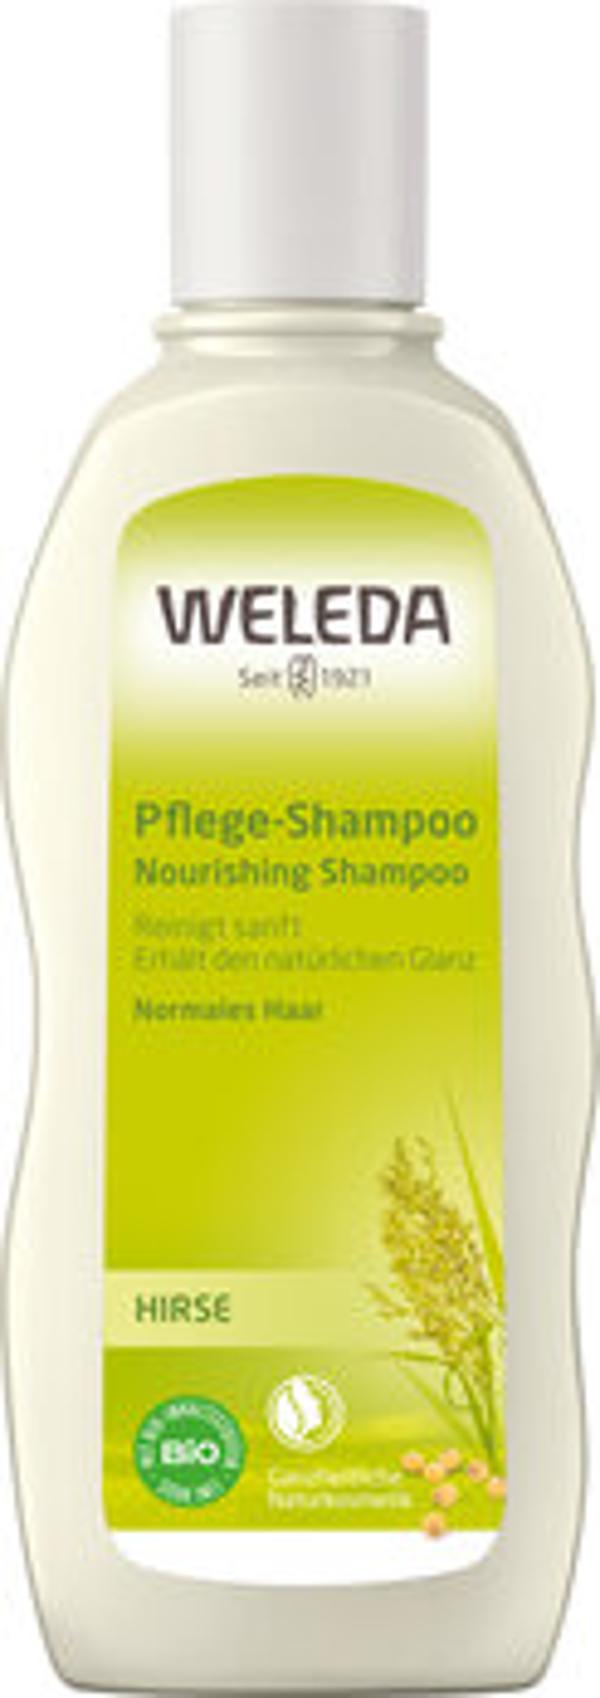 Produktfoto zu Shampoo Hirse Pflege 190ml